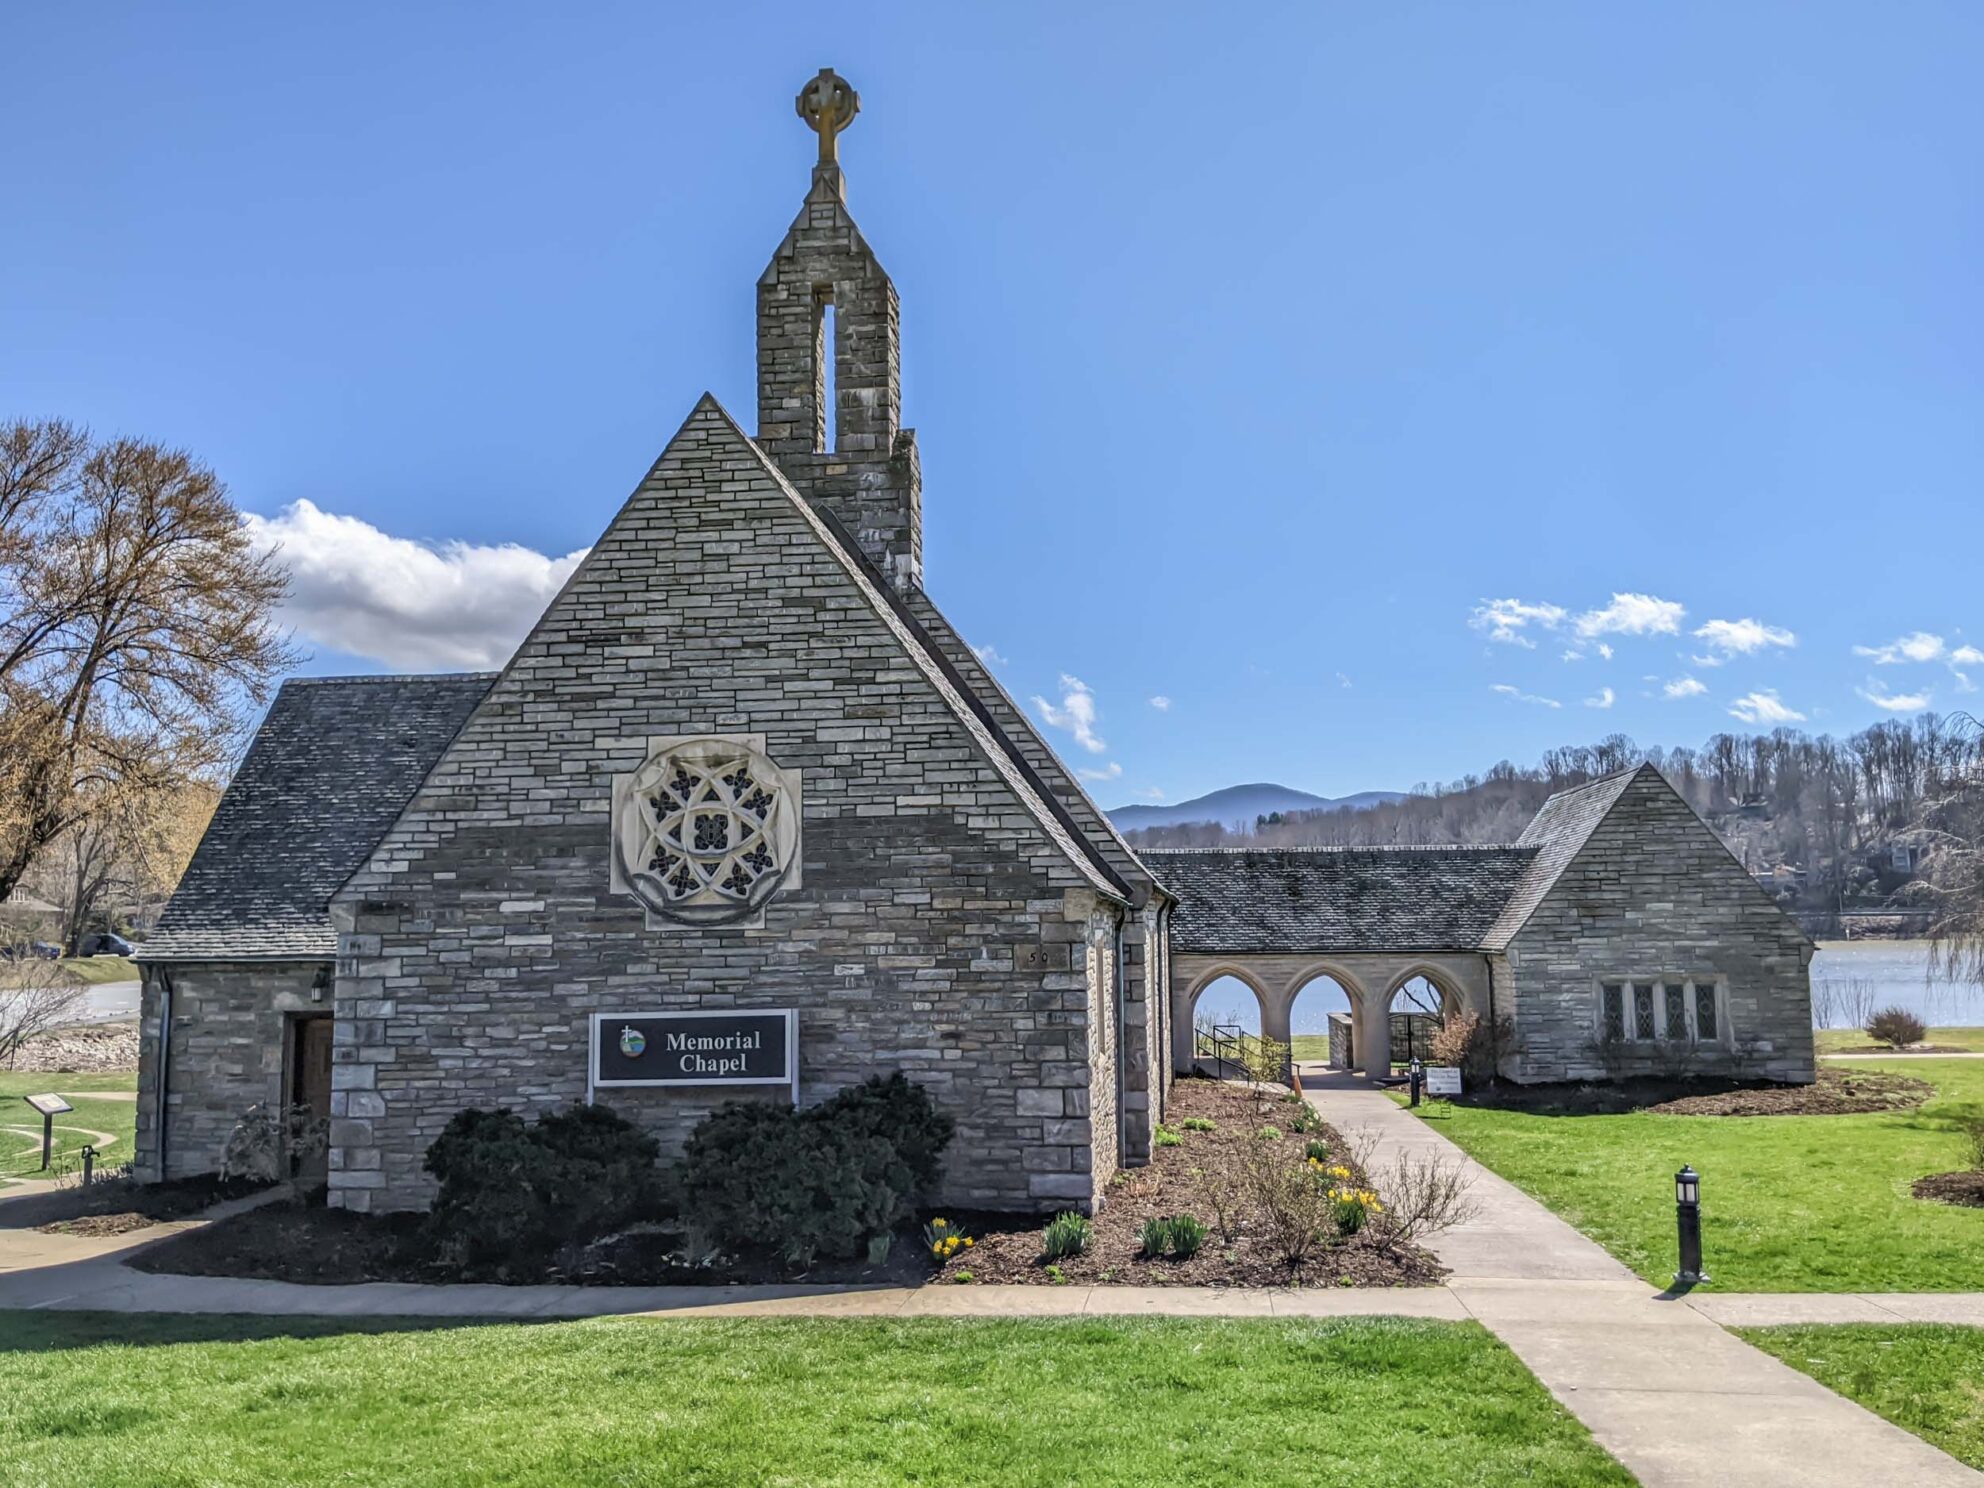 Memorial Chapel in early spring